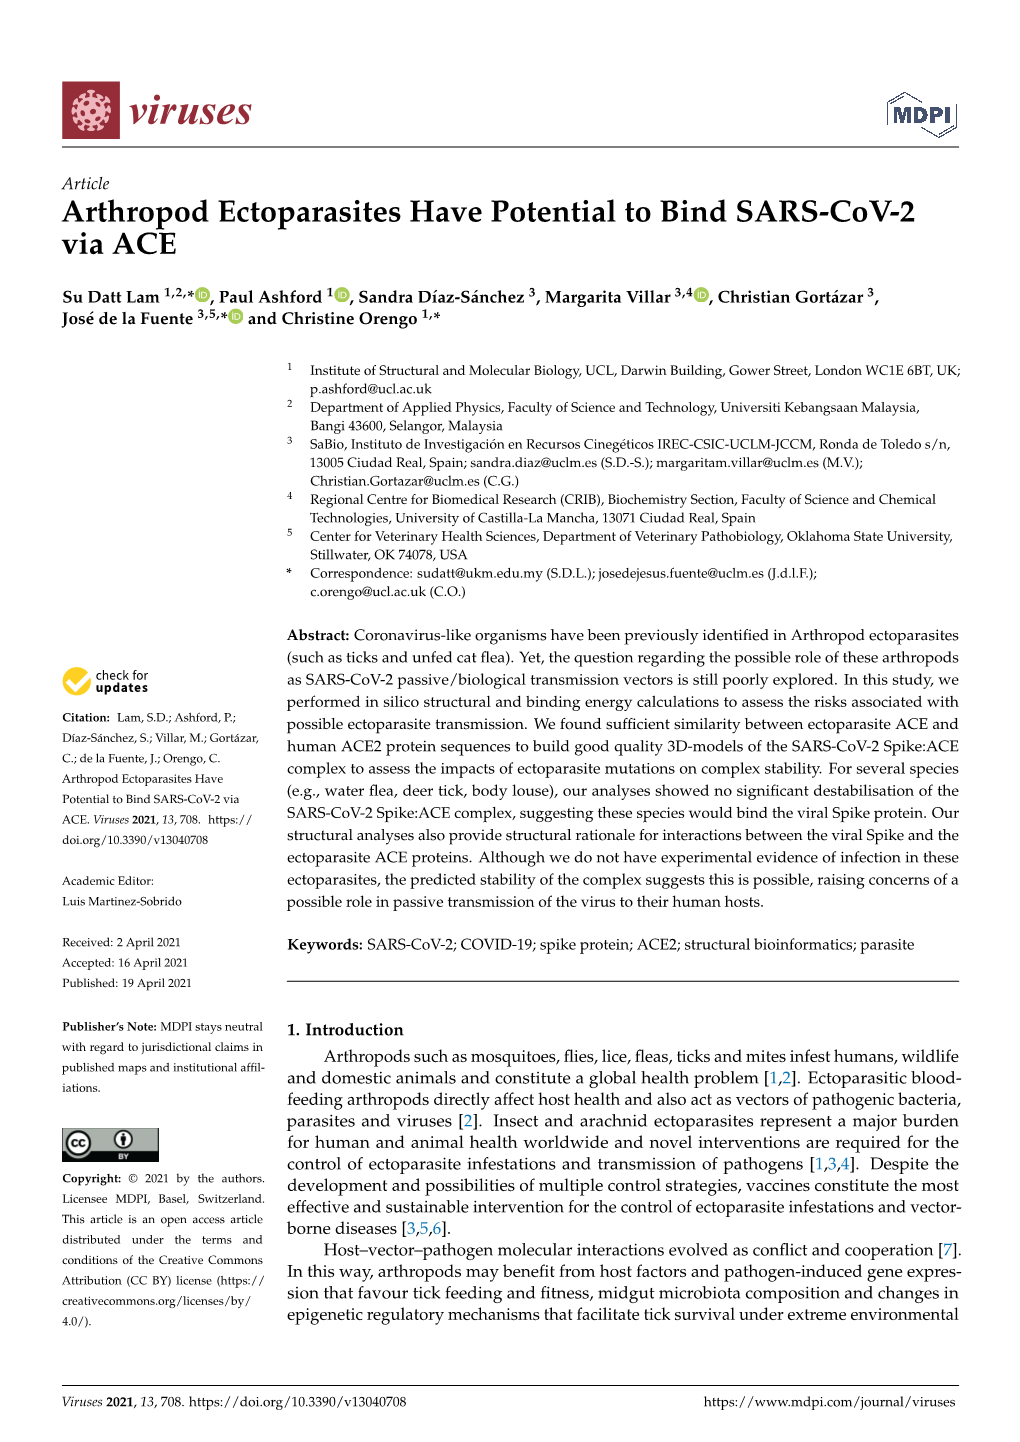 Arthropod Ectoparasites Have Potential to Bind SARS-Cov-2 Via ACE